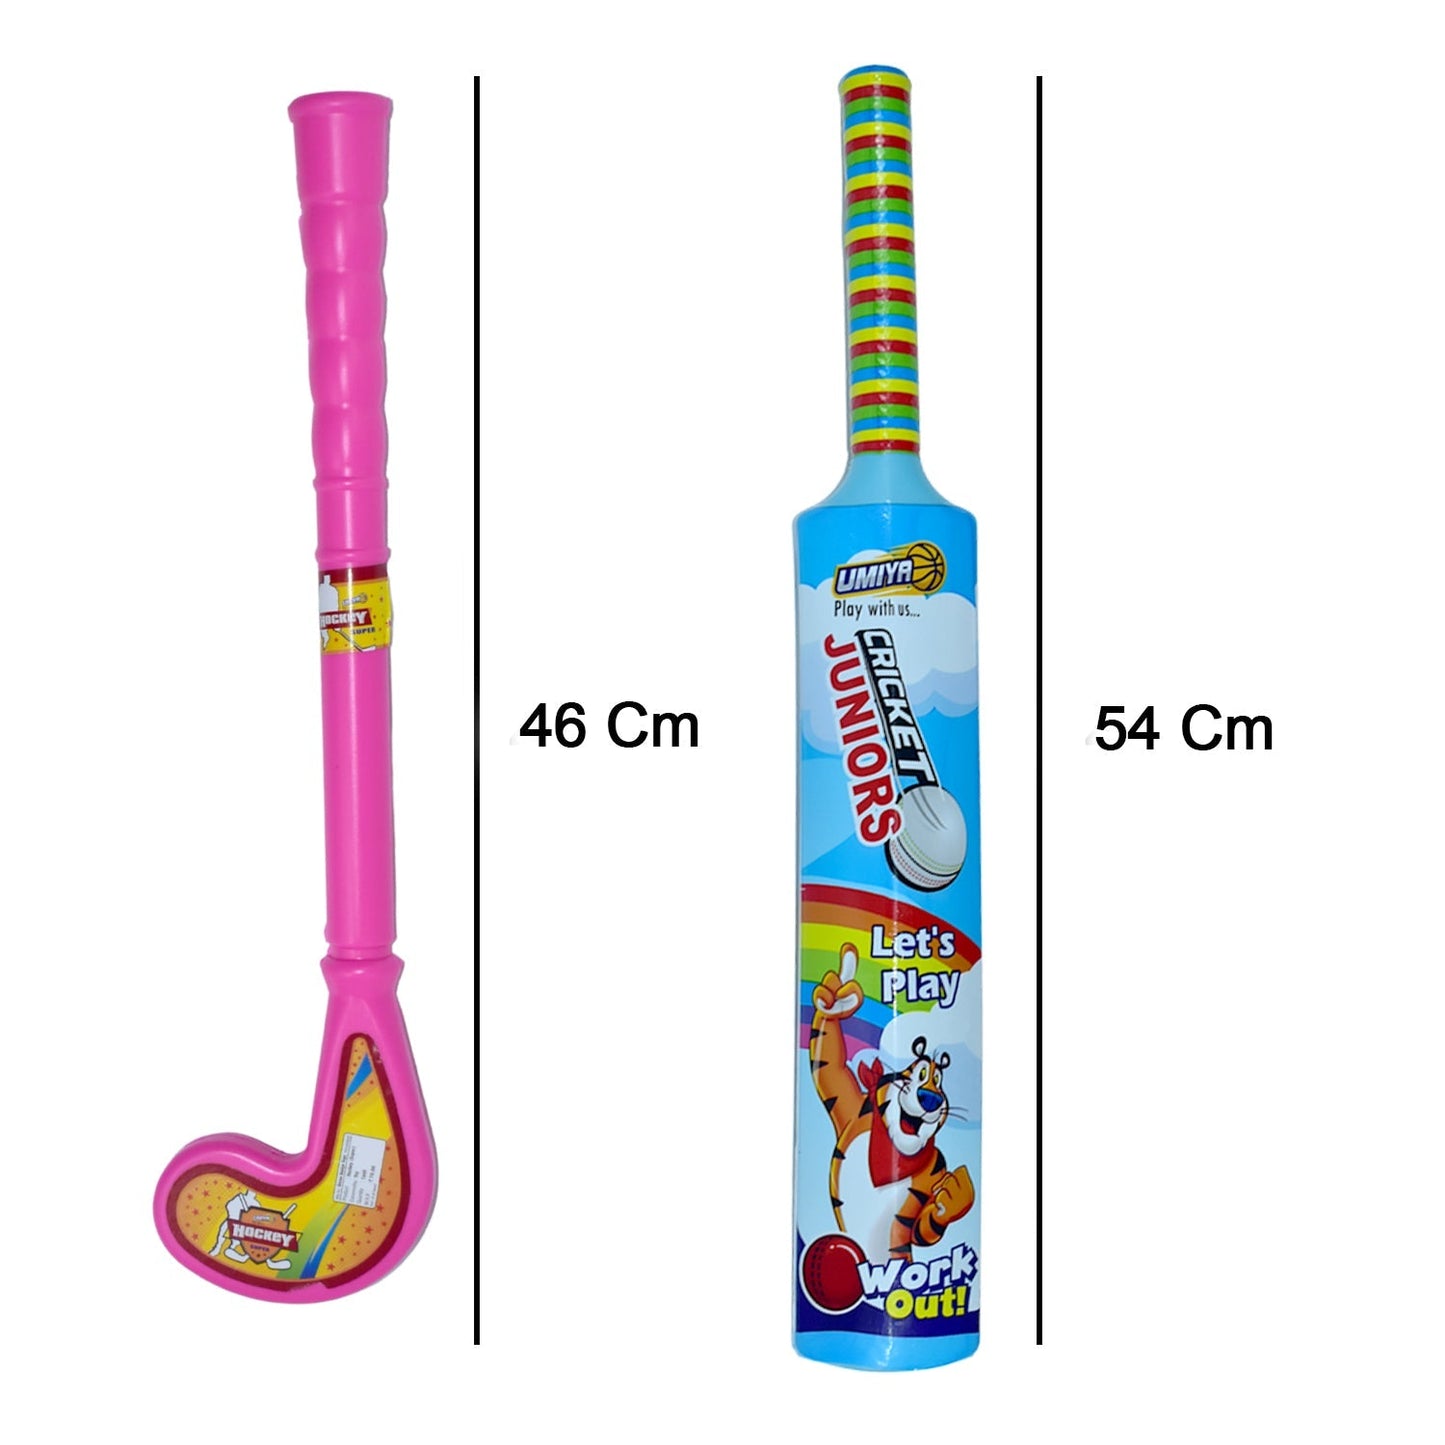 8023 Combo of Light Weight Plastic Bat, Ball & Hockey for Kids Dukandaily